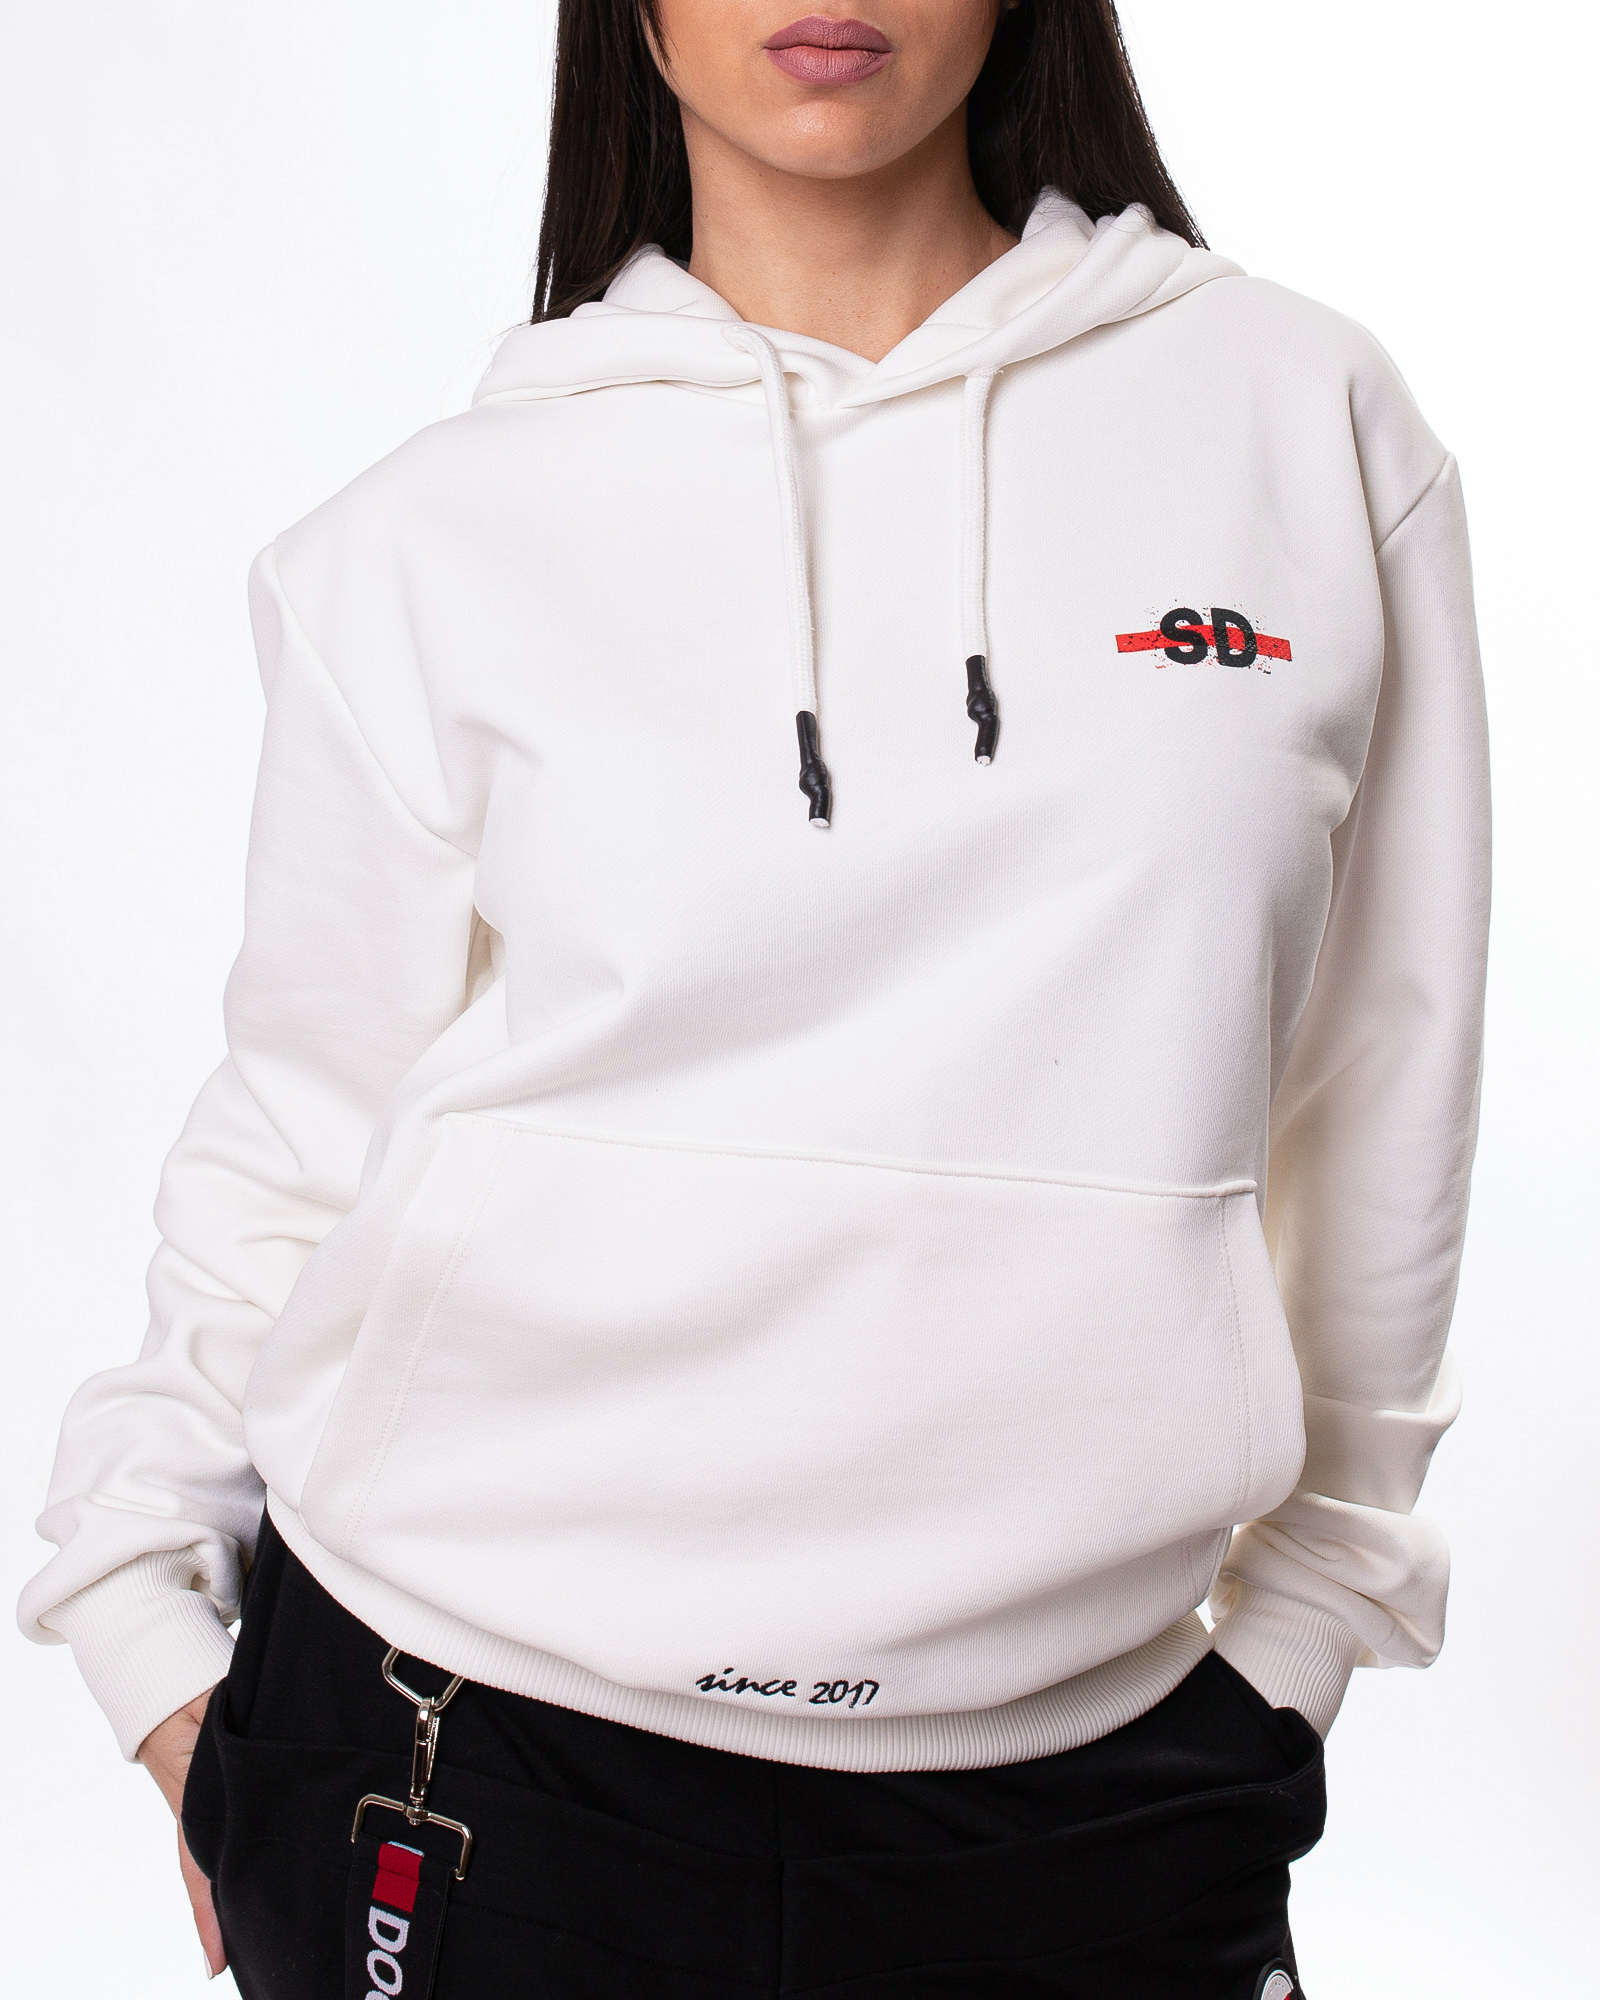 SD Lion hoodie